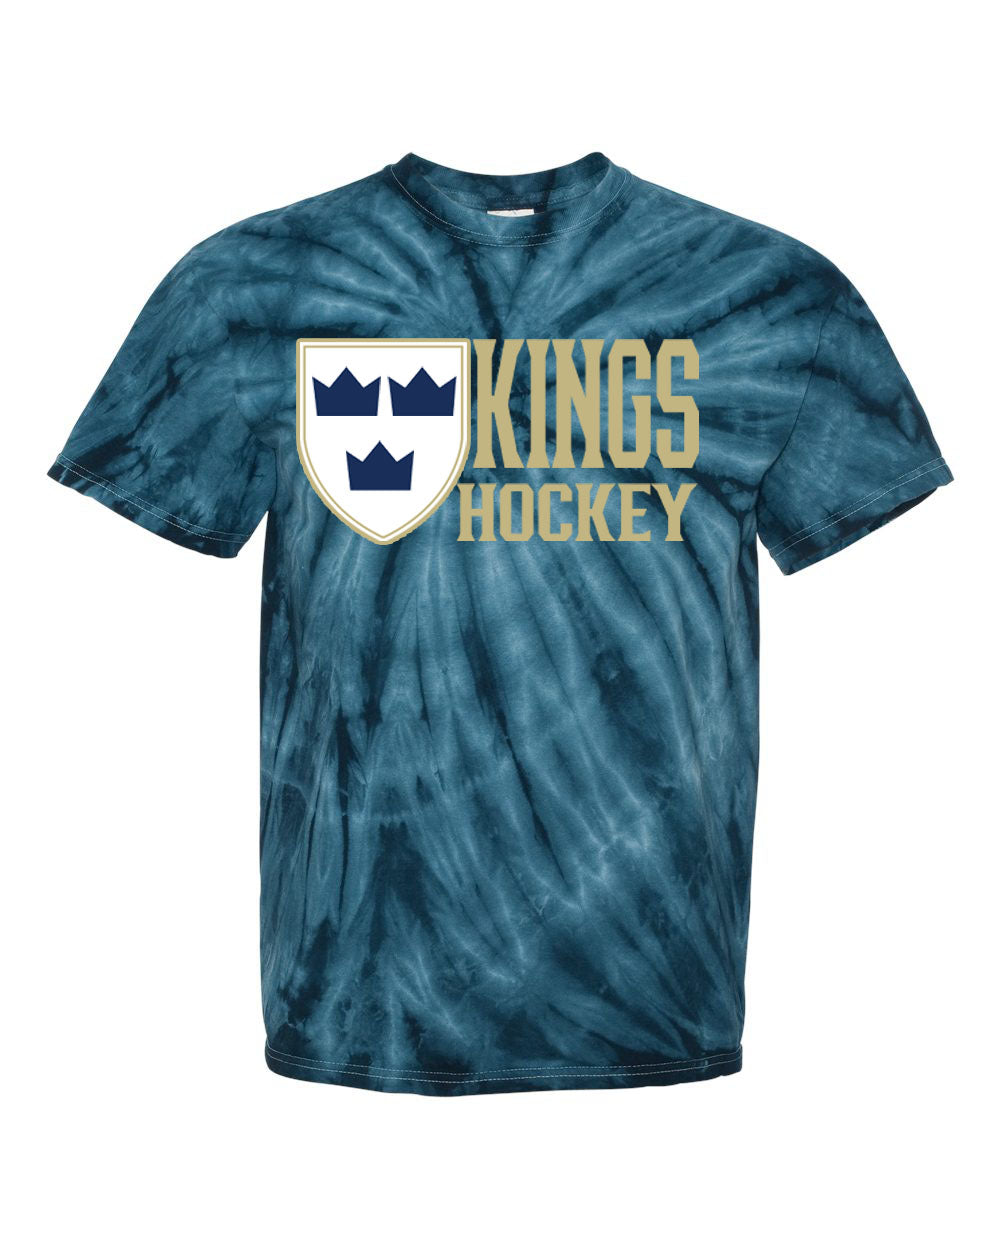 Kings Hockey Tie Dye t-shirt Design 4